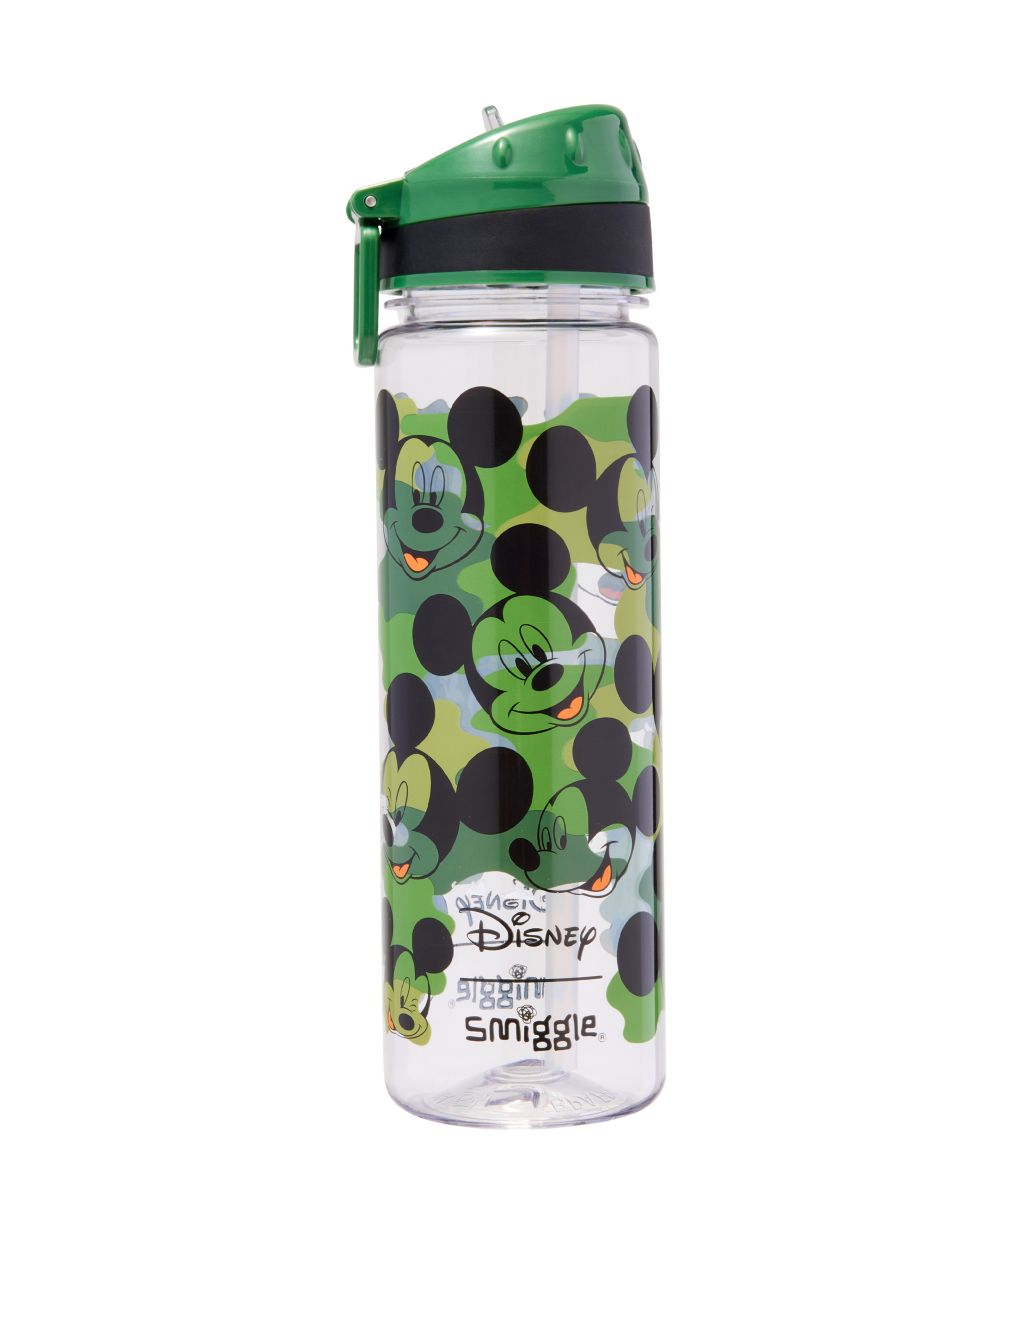 Disney Mickey Mouse 18 oz Tritan Water Bottle